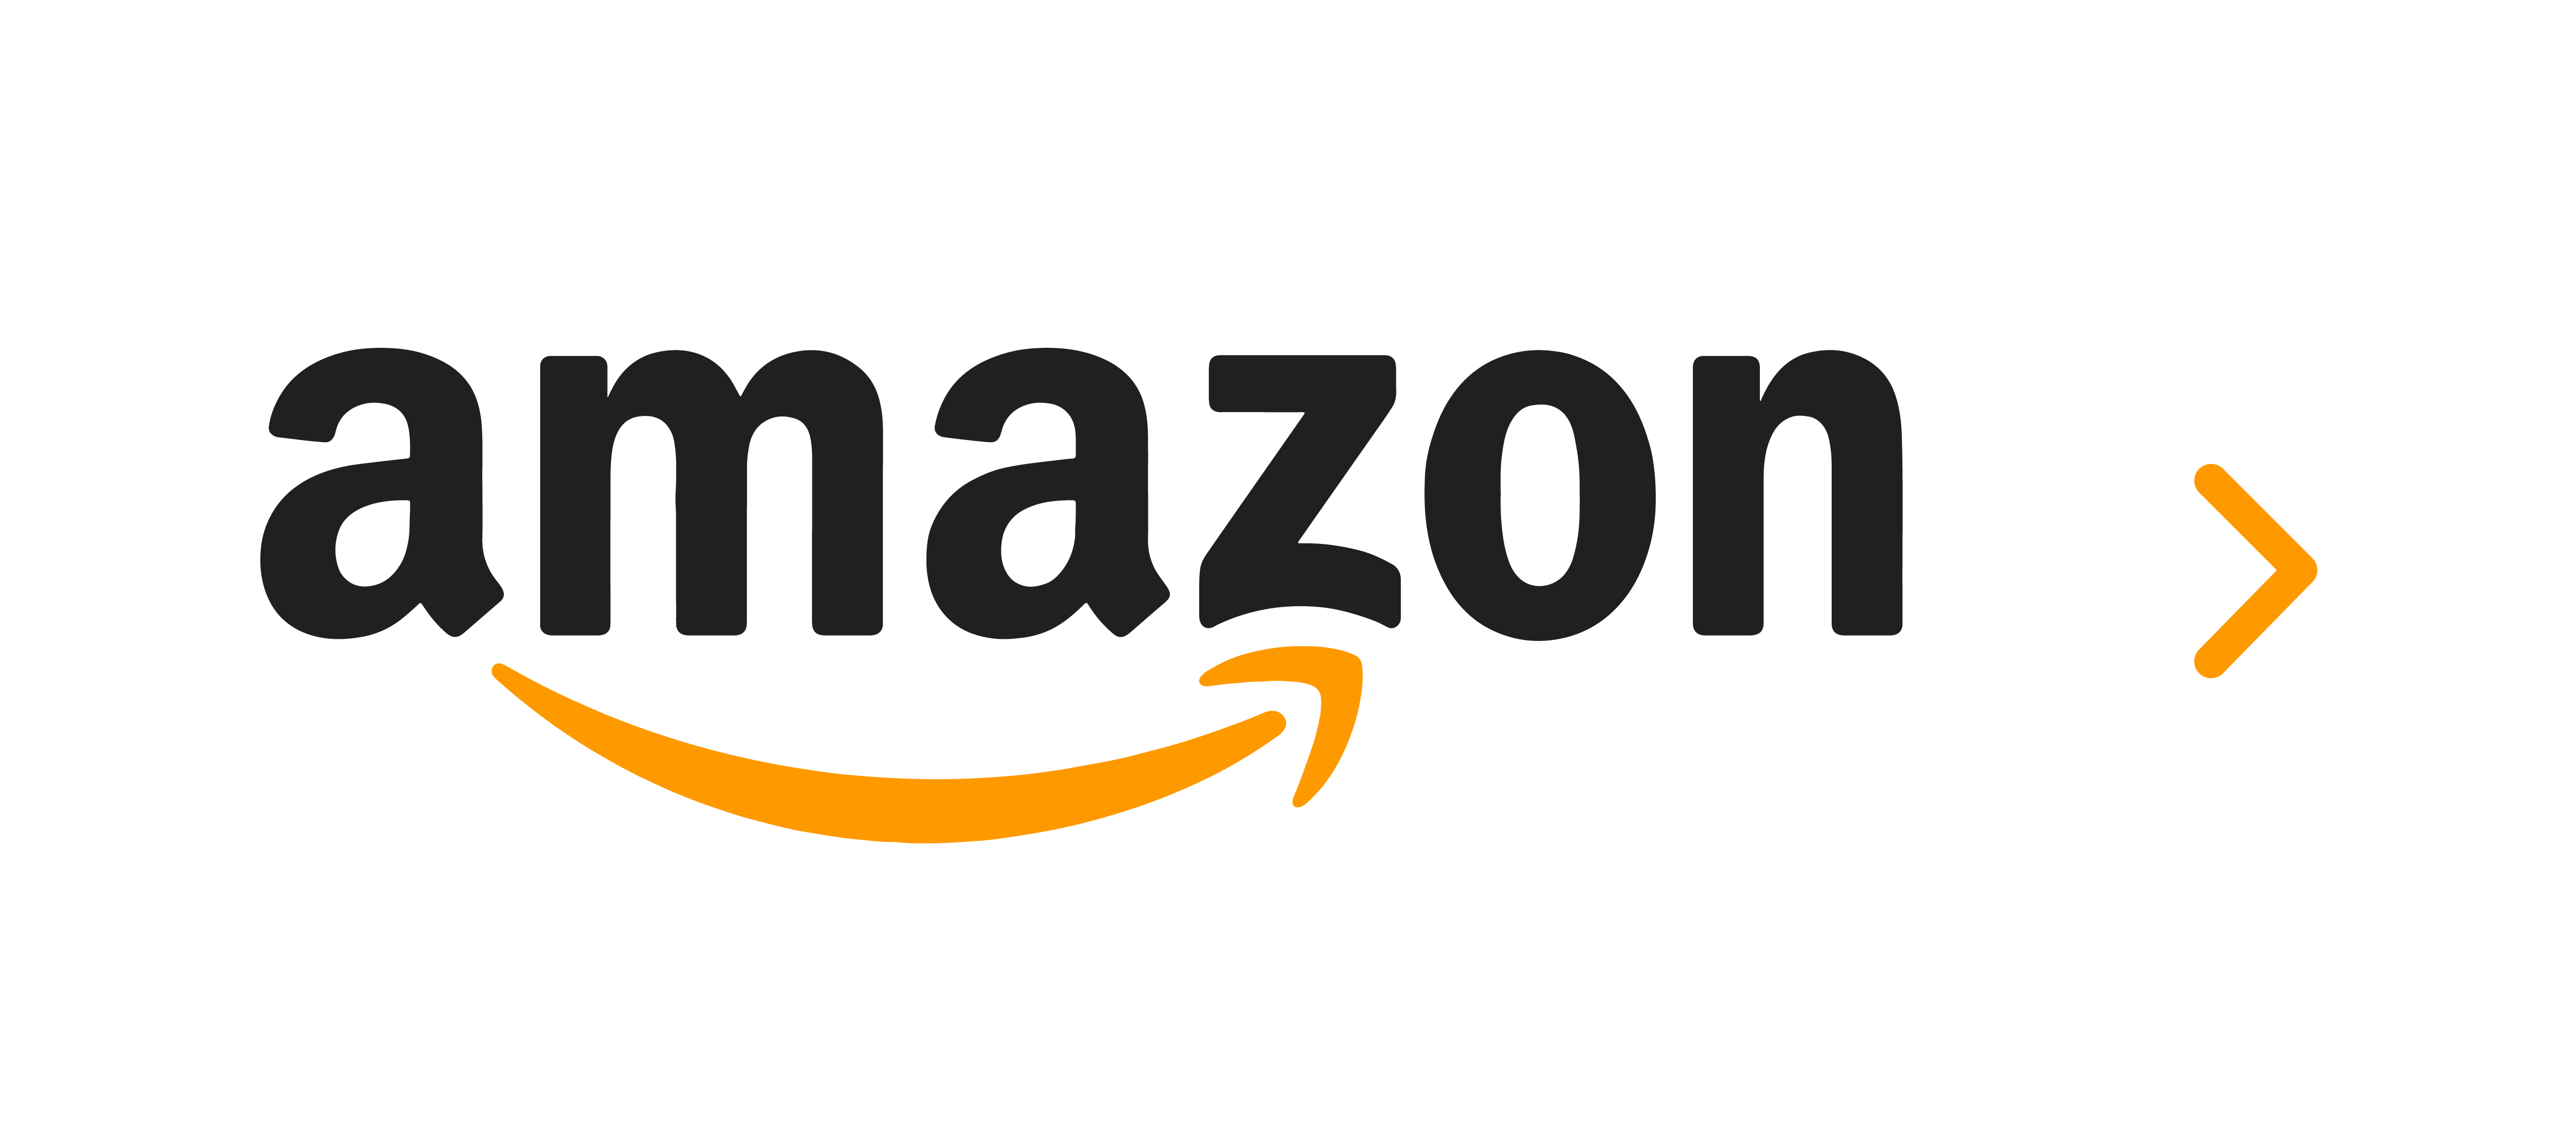 Amazon eretailer